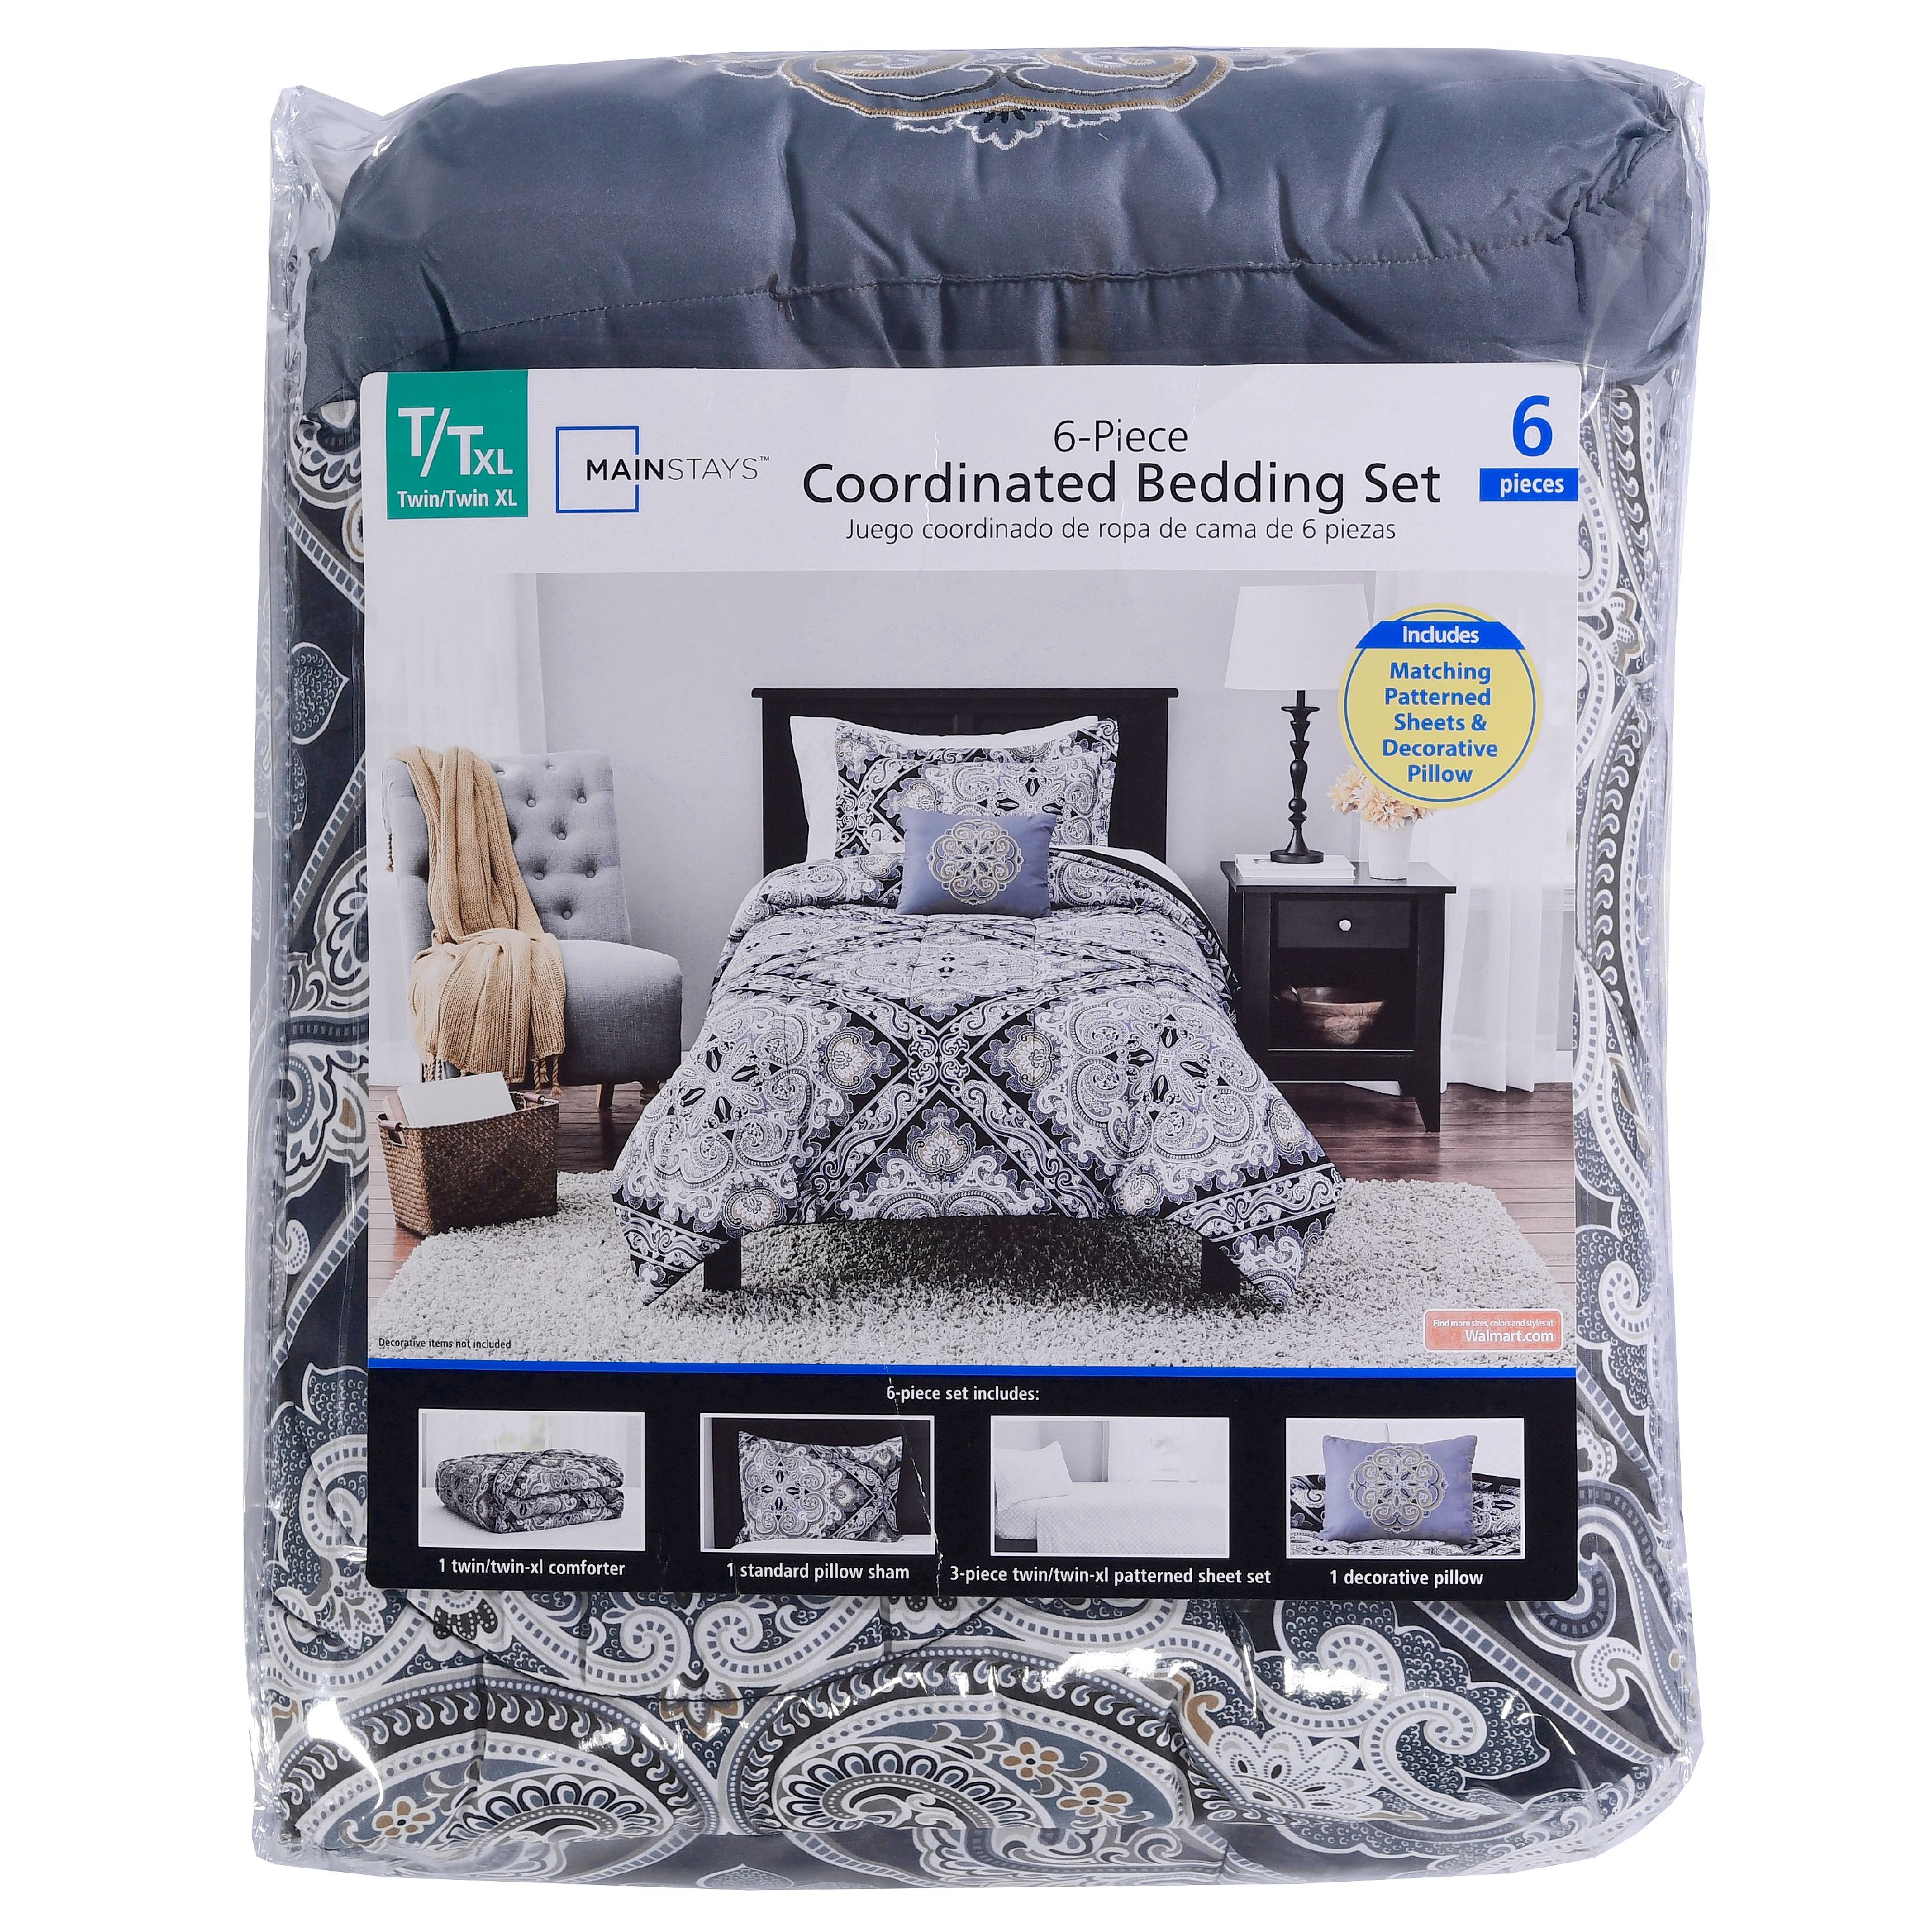 Mainstays Black Diamond Complete Comforter Bedding, Twin/Twin XL - image 5 of 7